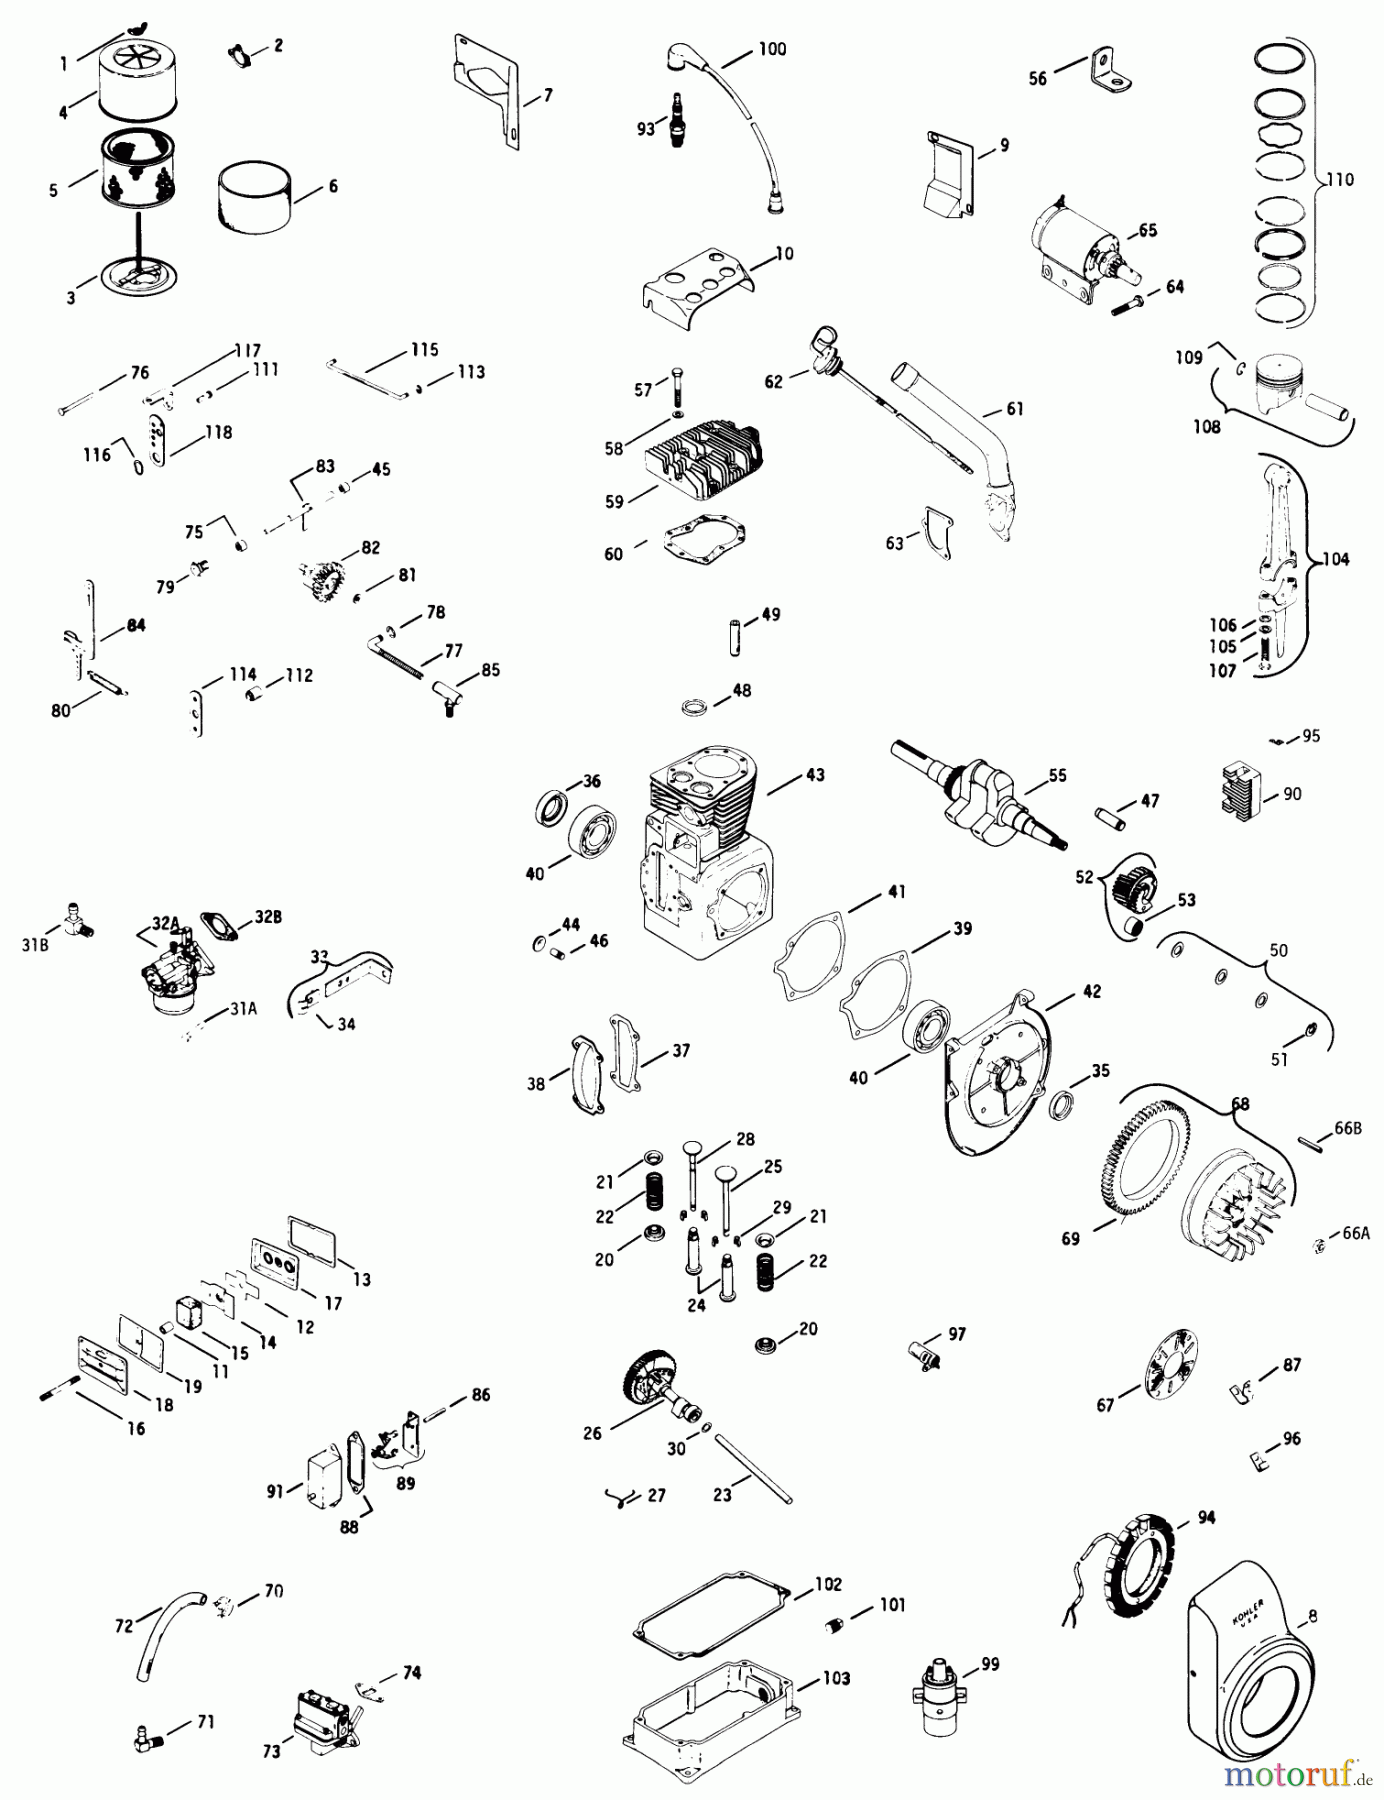  Toro Neu Mowers, Lawn & Garden Tractor Seite 1 71-12KS01 (C-120) - Toro C-120 Automatic Tractor, 1977 16 H.P. ENGINE K341S, SPEC 71128A